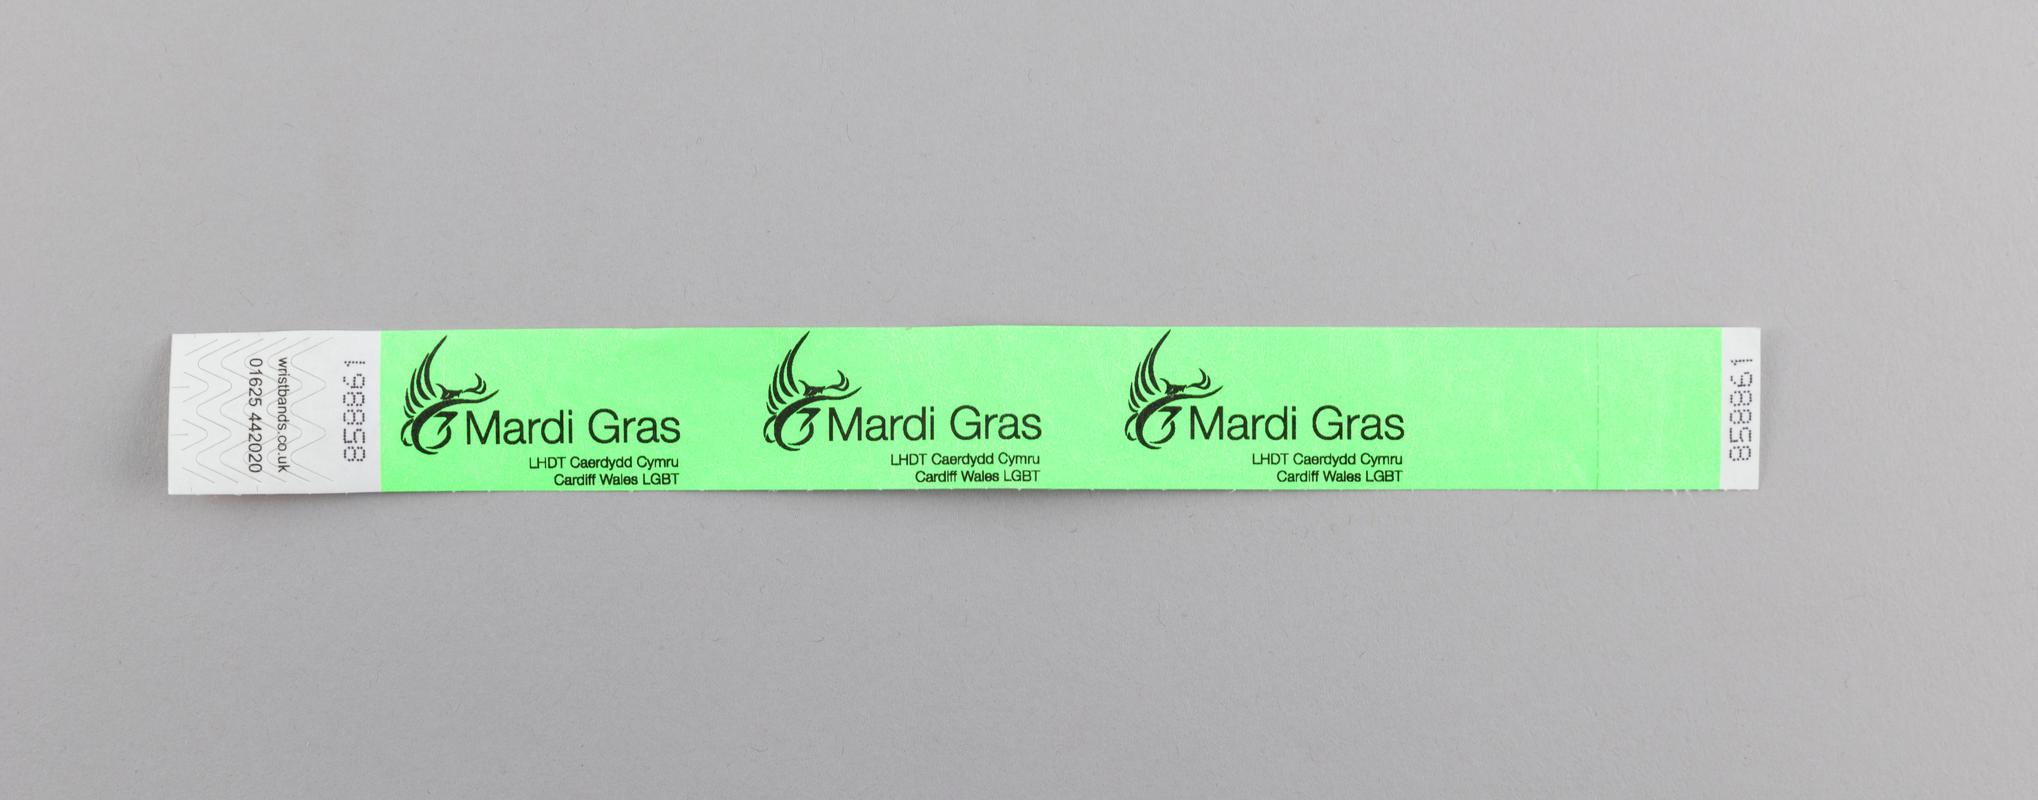 Green Cardiff Mardi Gras wrist strap.